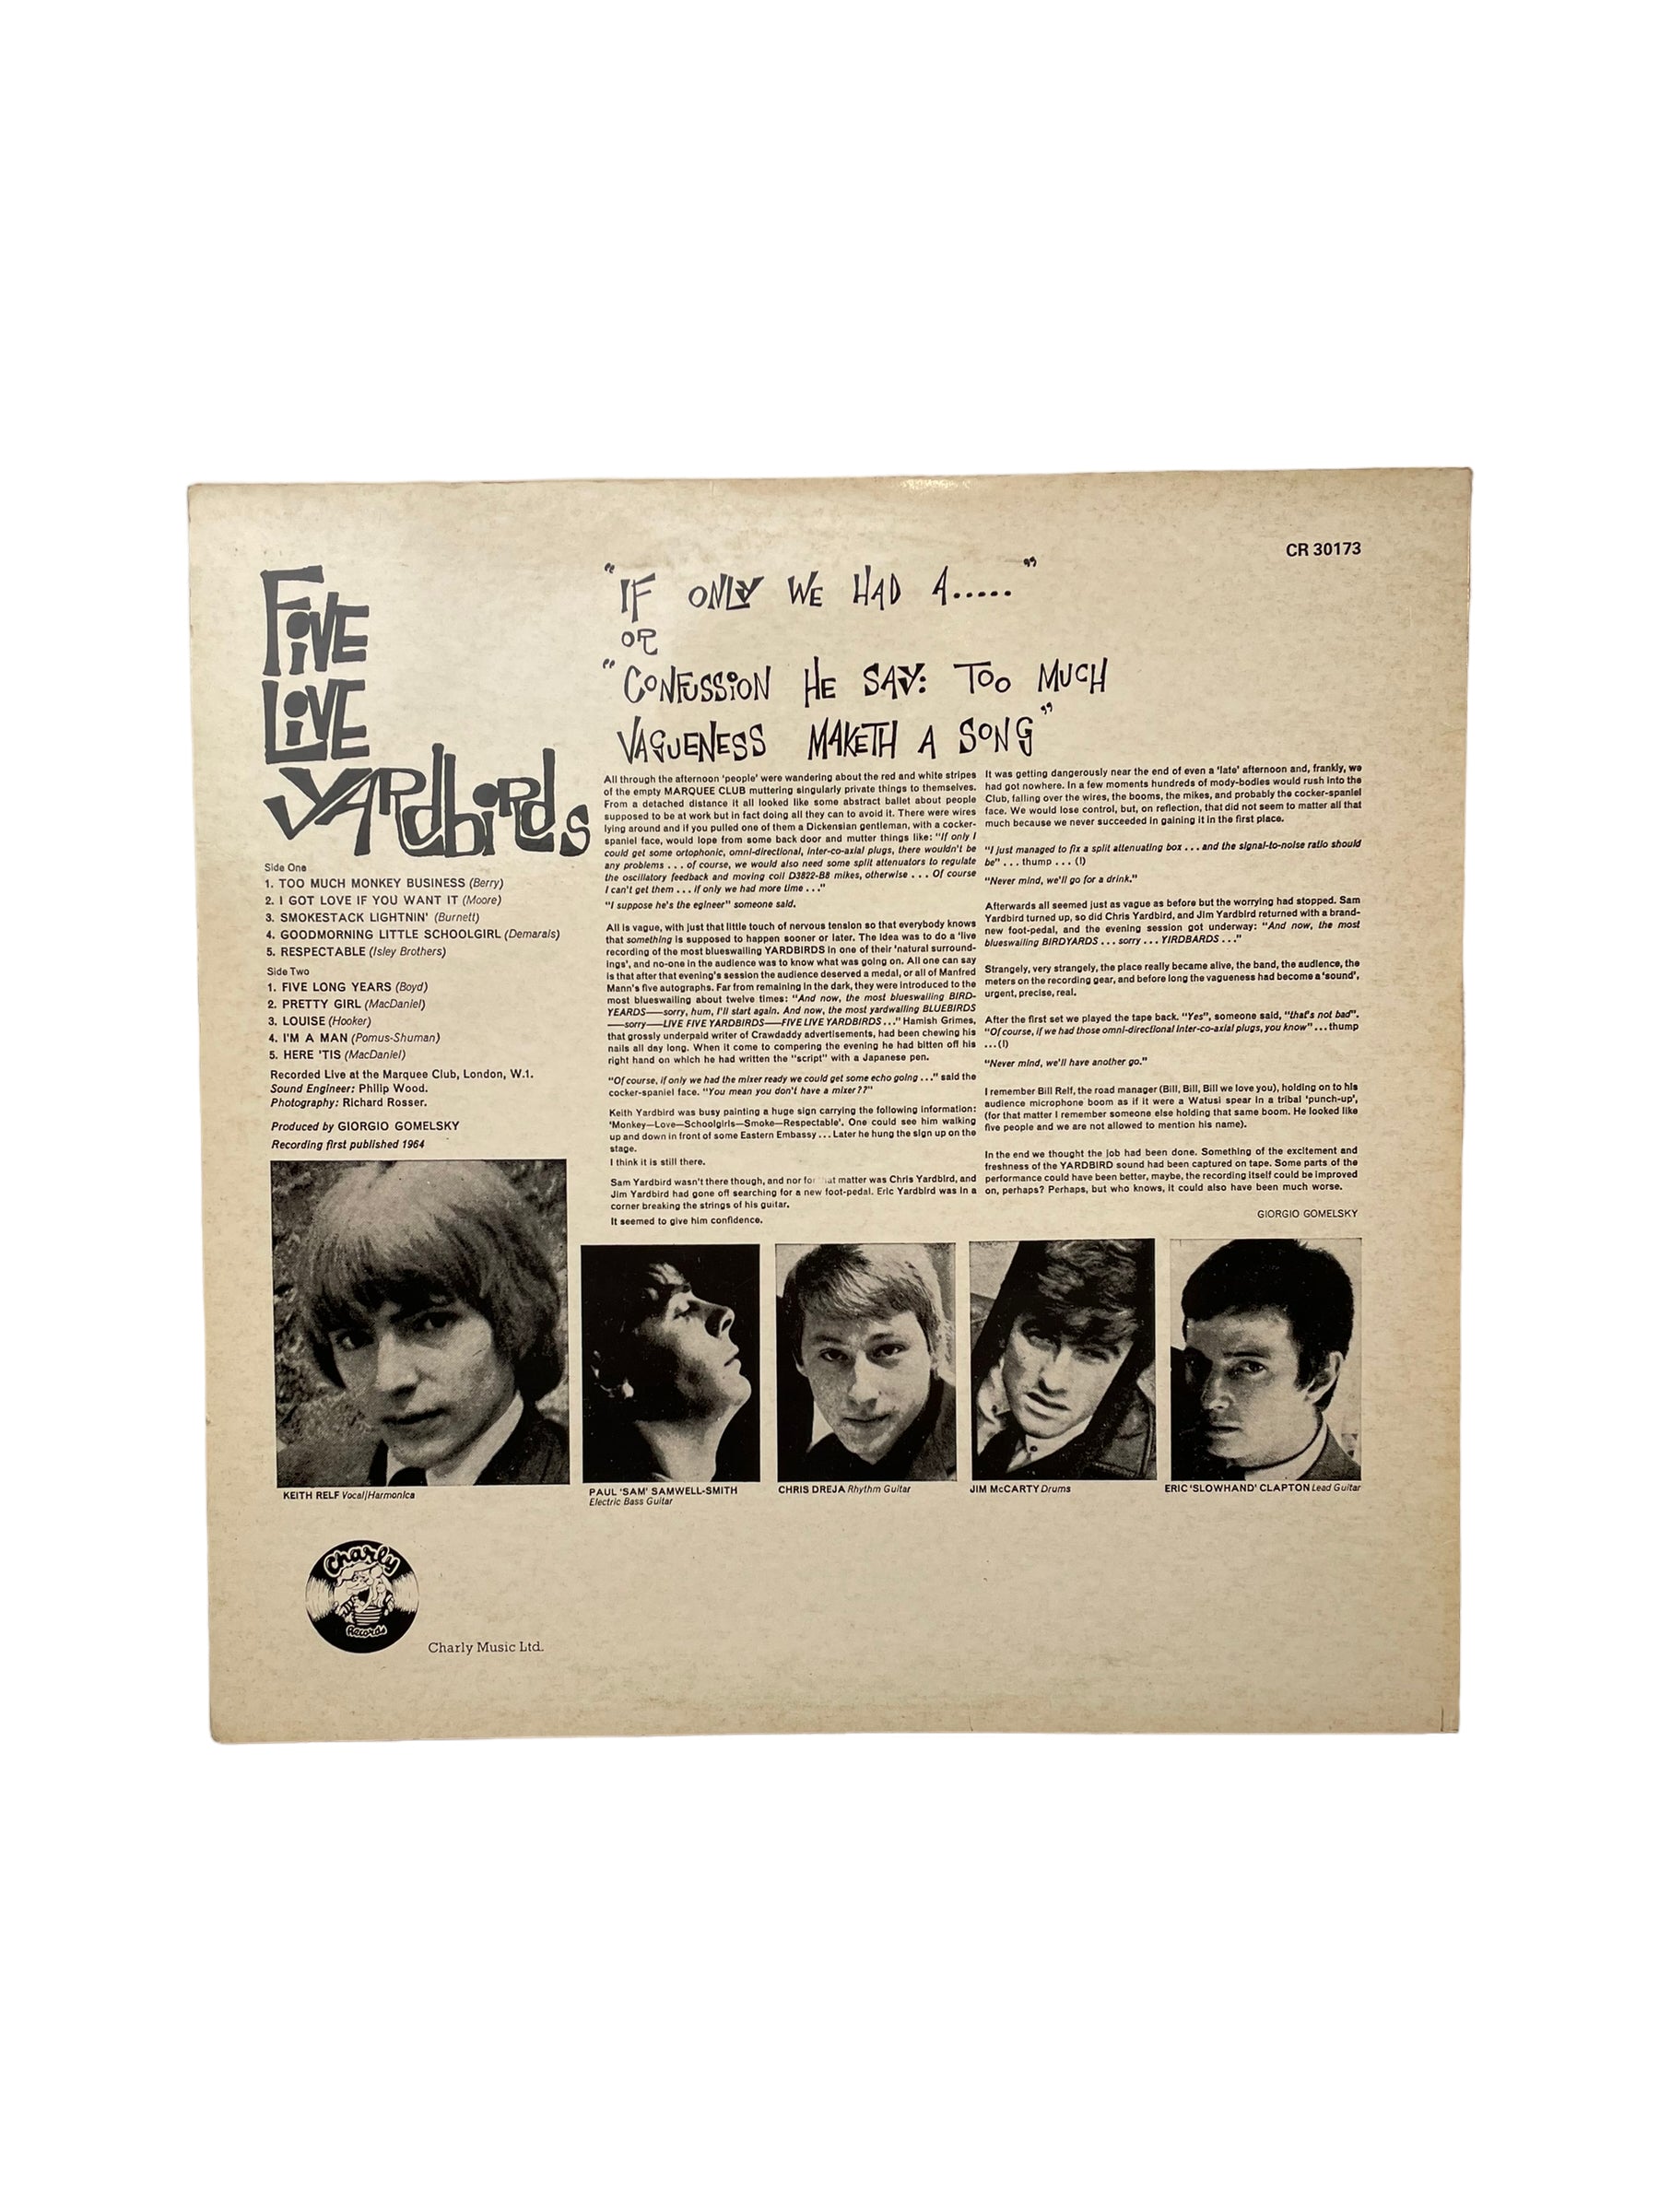 Yardbirds "Five Live Yardbirds" - Used Vinyl